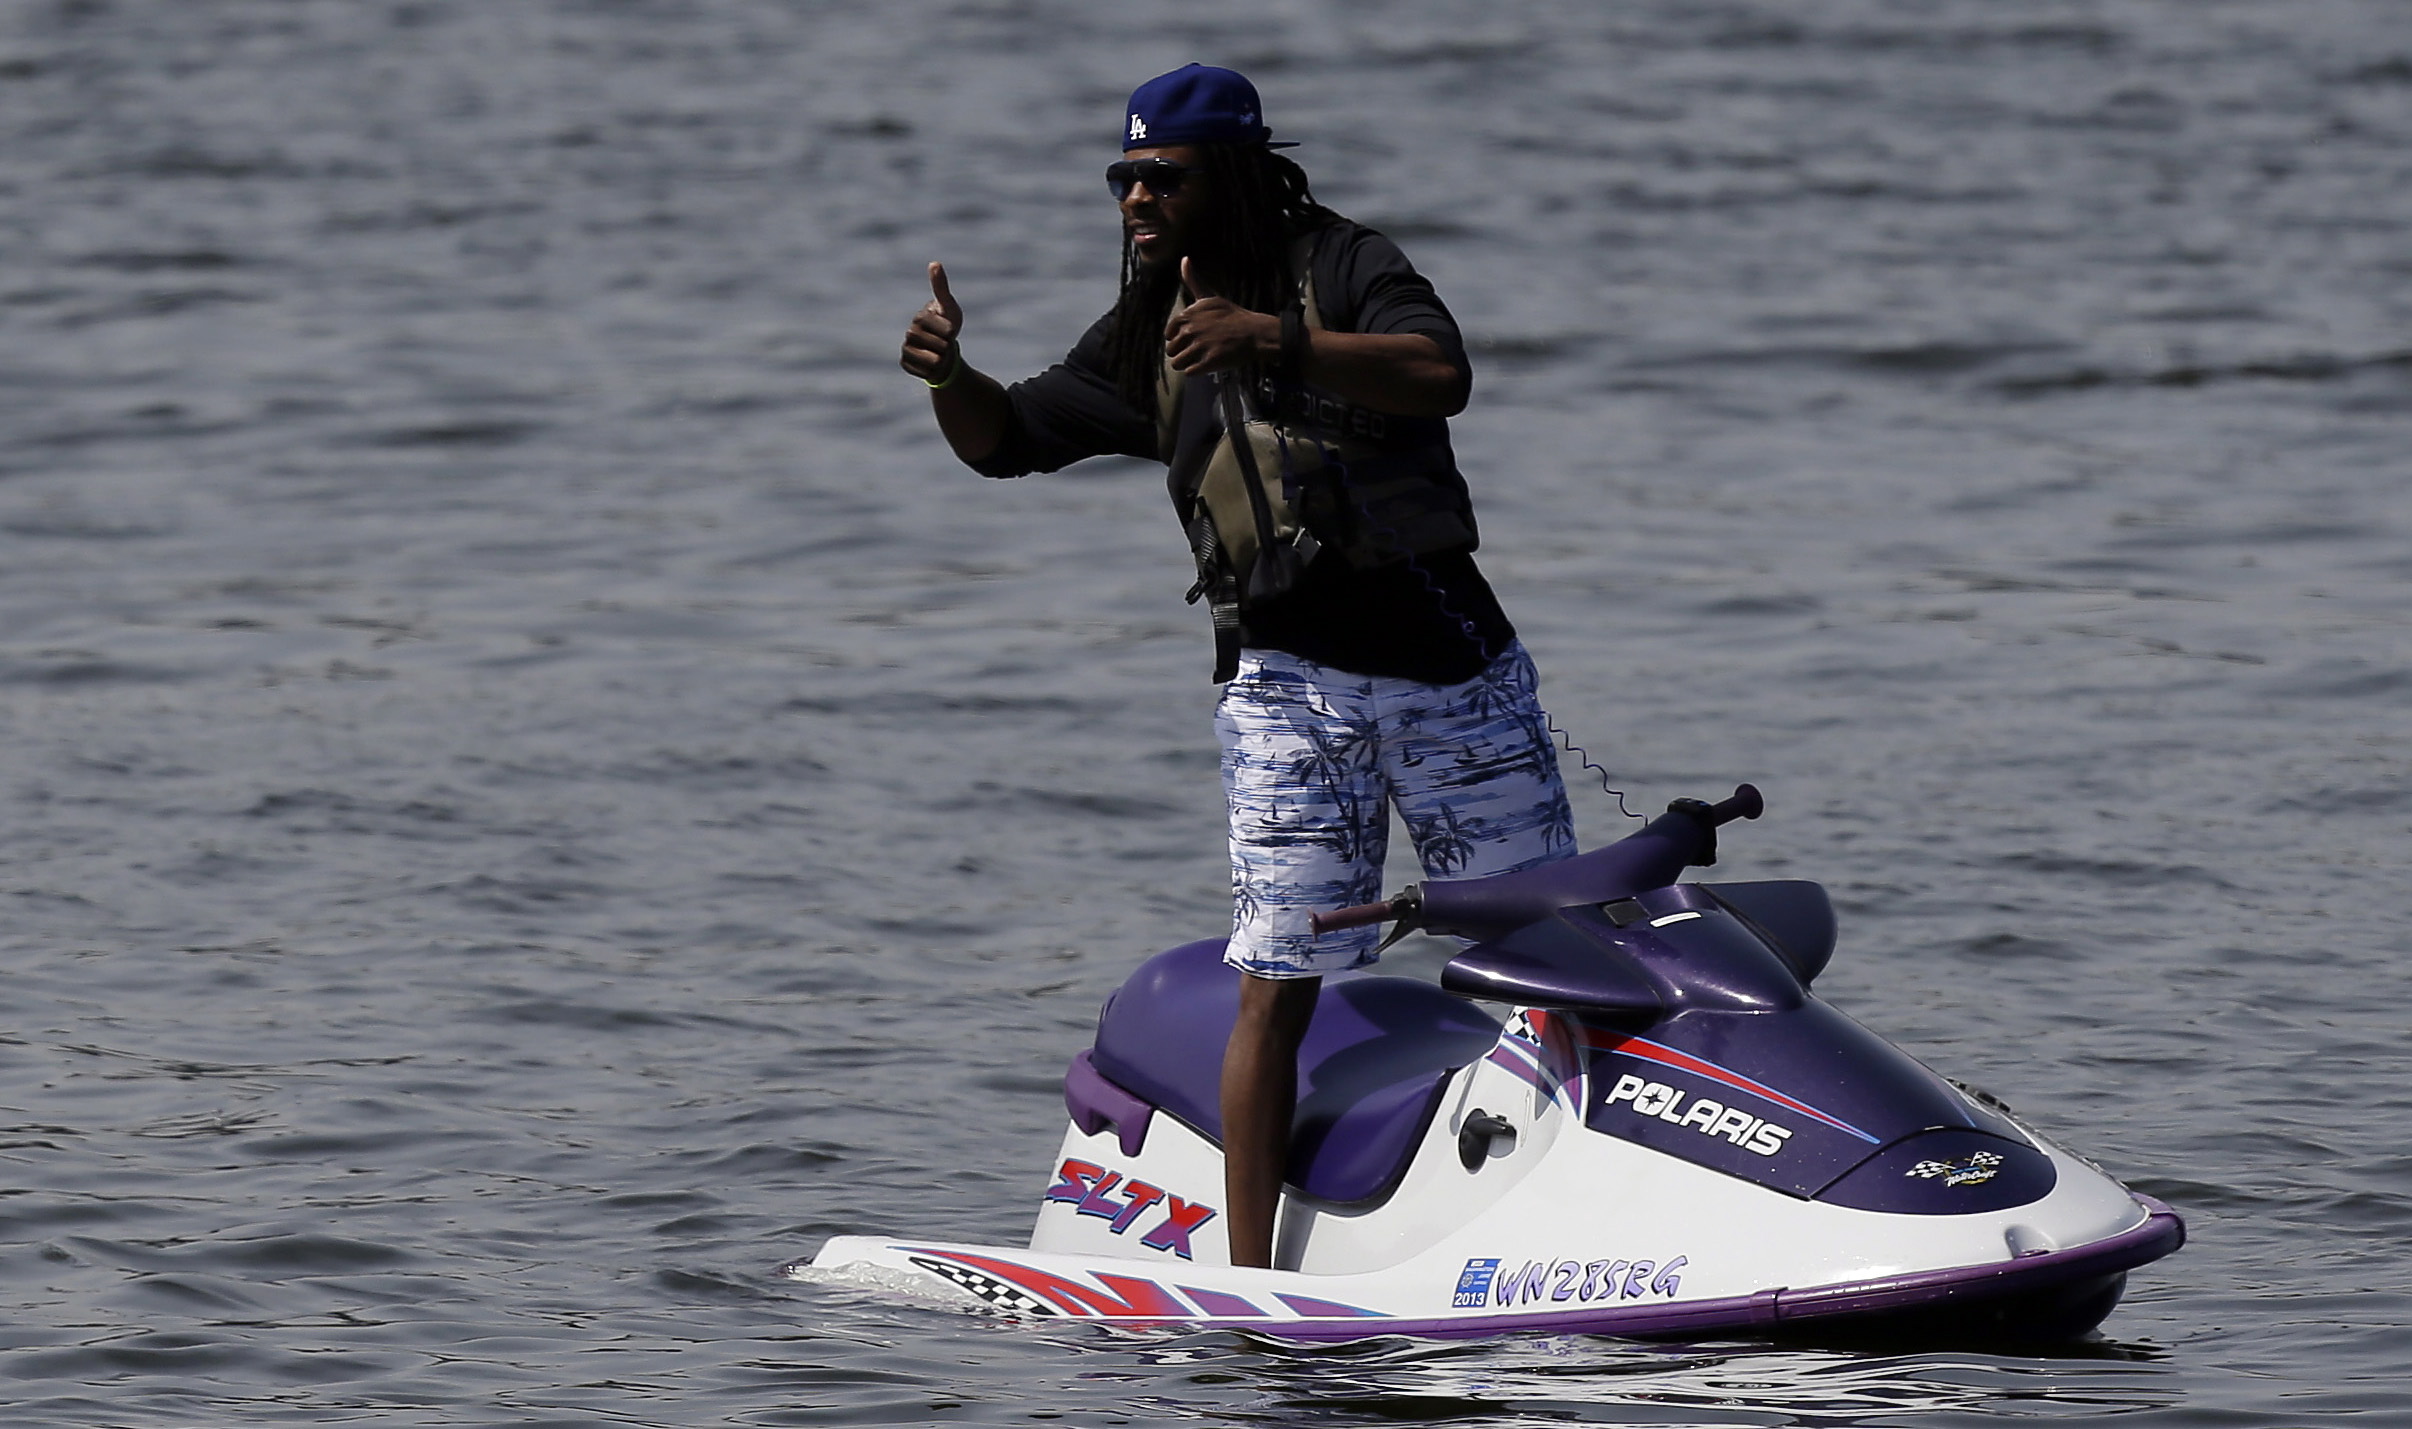 Seattle Seahawks cornerback Richard Sherman give an approving thumbs up from a personal watercraft on Lake Washington.